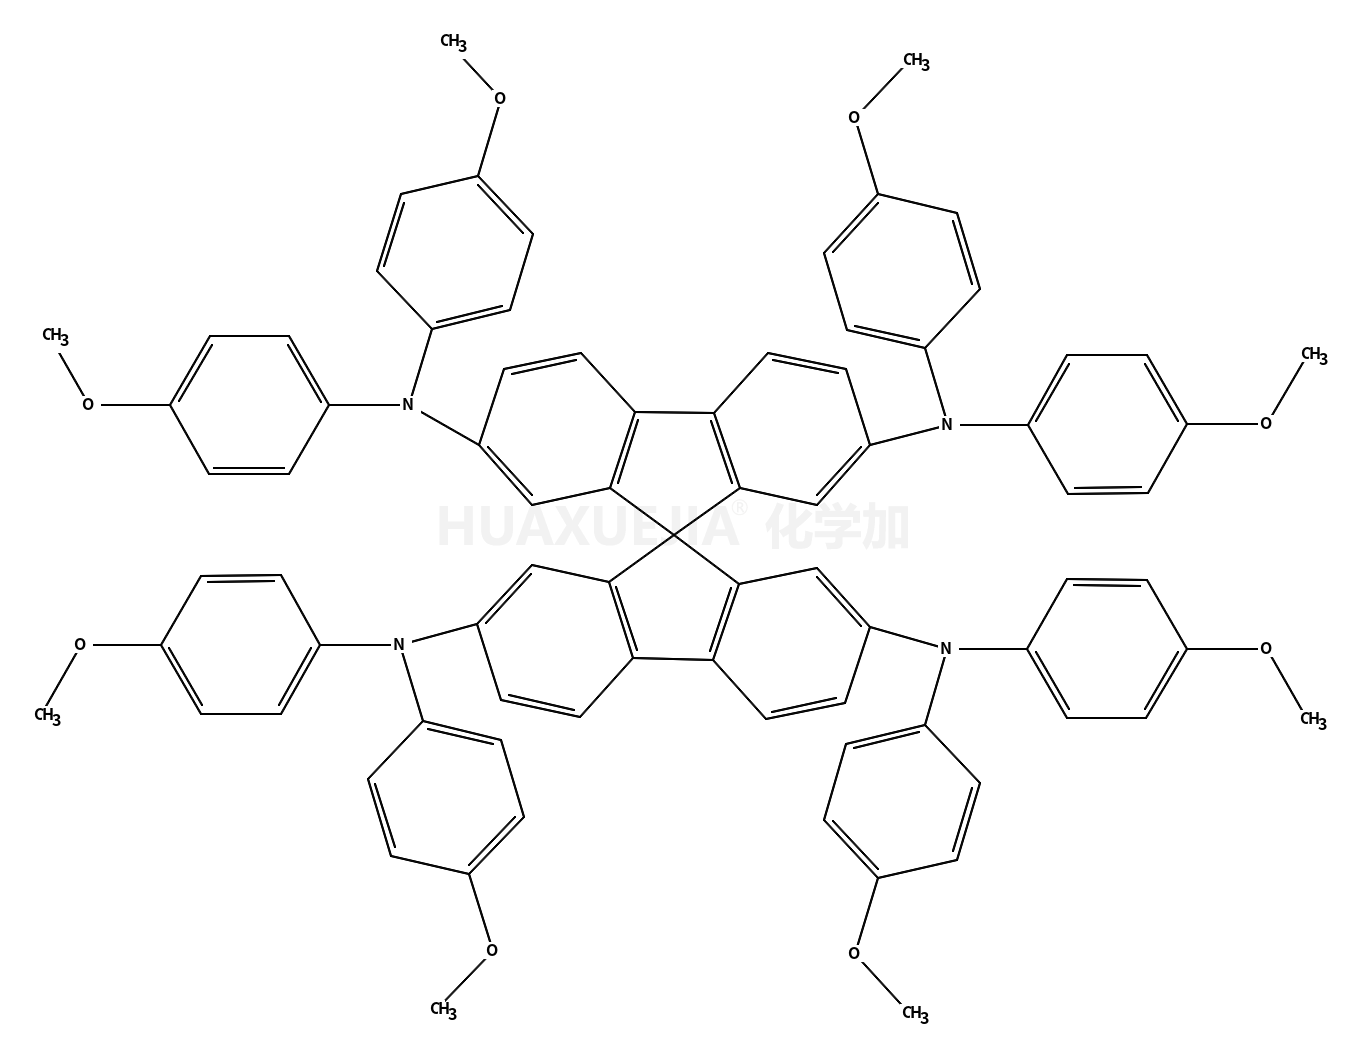 2,2’,7,7’-Tetrakis(N,N-p-dimethoxyphenylamino)-9,9’- spirobifluorene